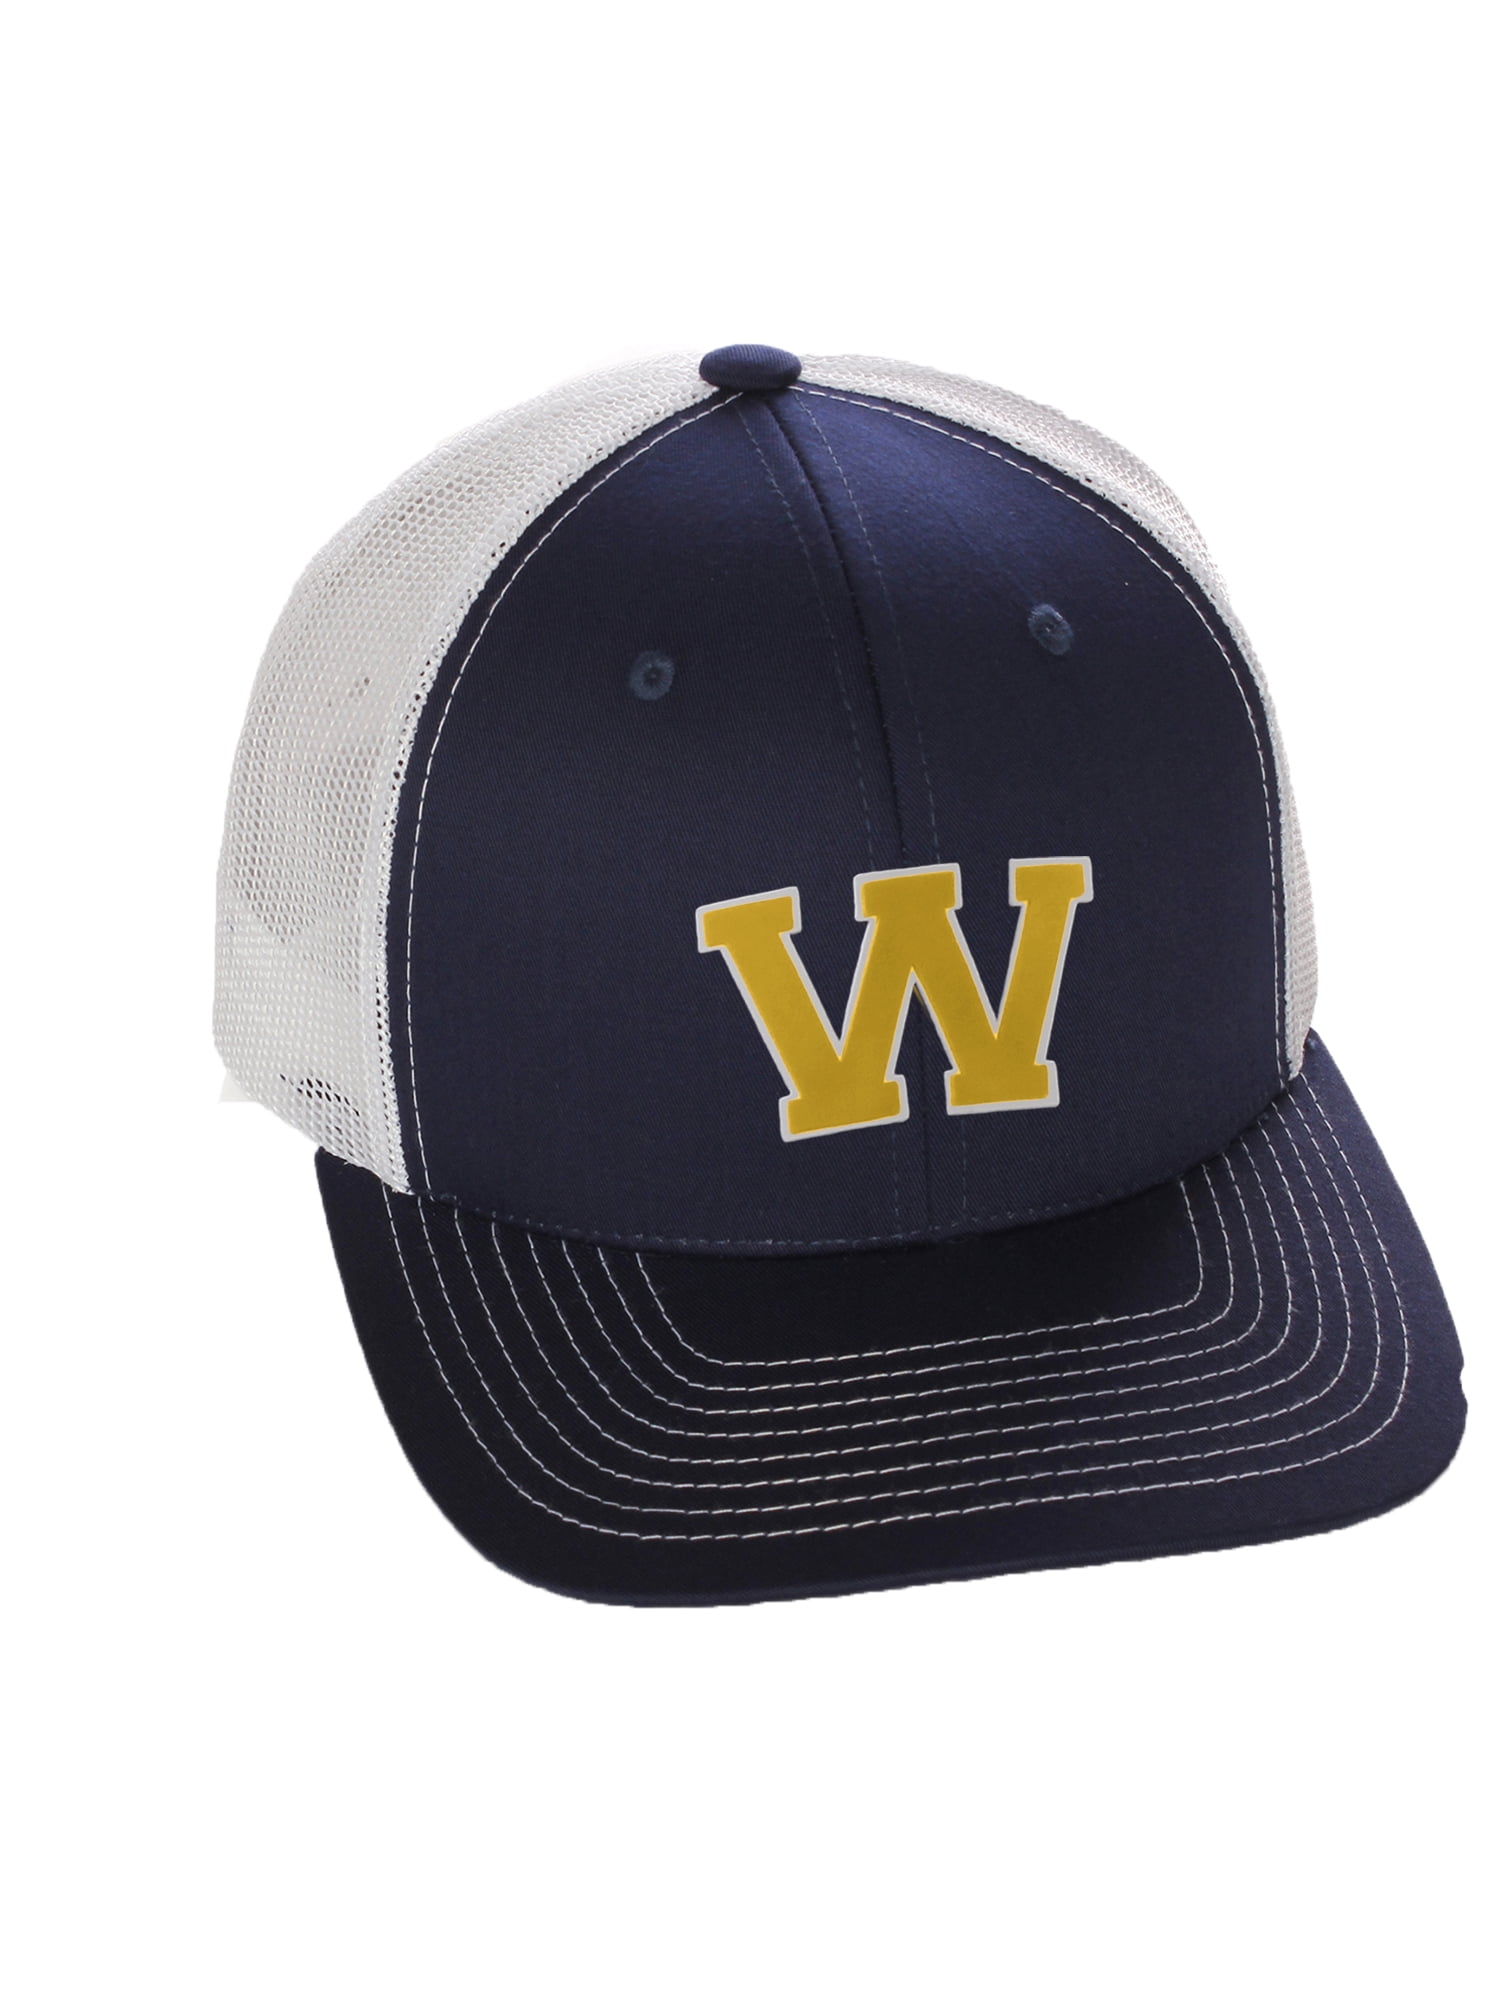 team sports custom baseball letter cap initial trucker adjustable snapback hat w